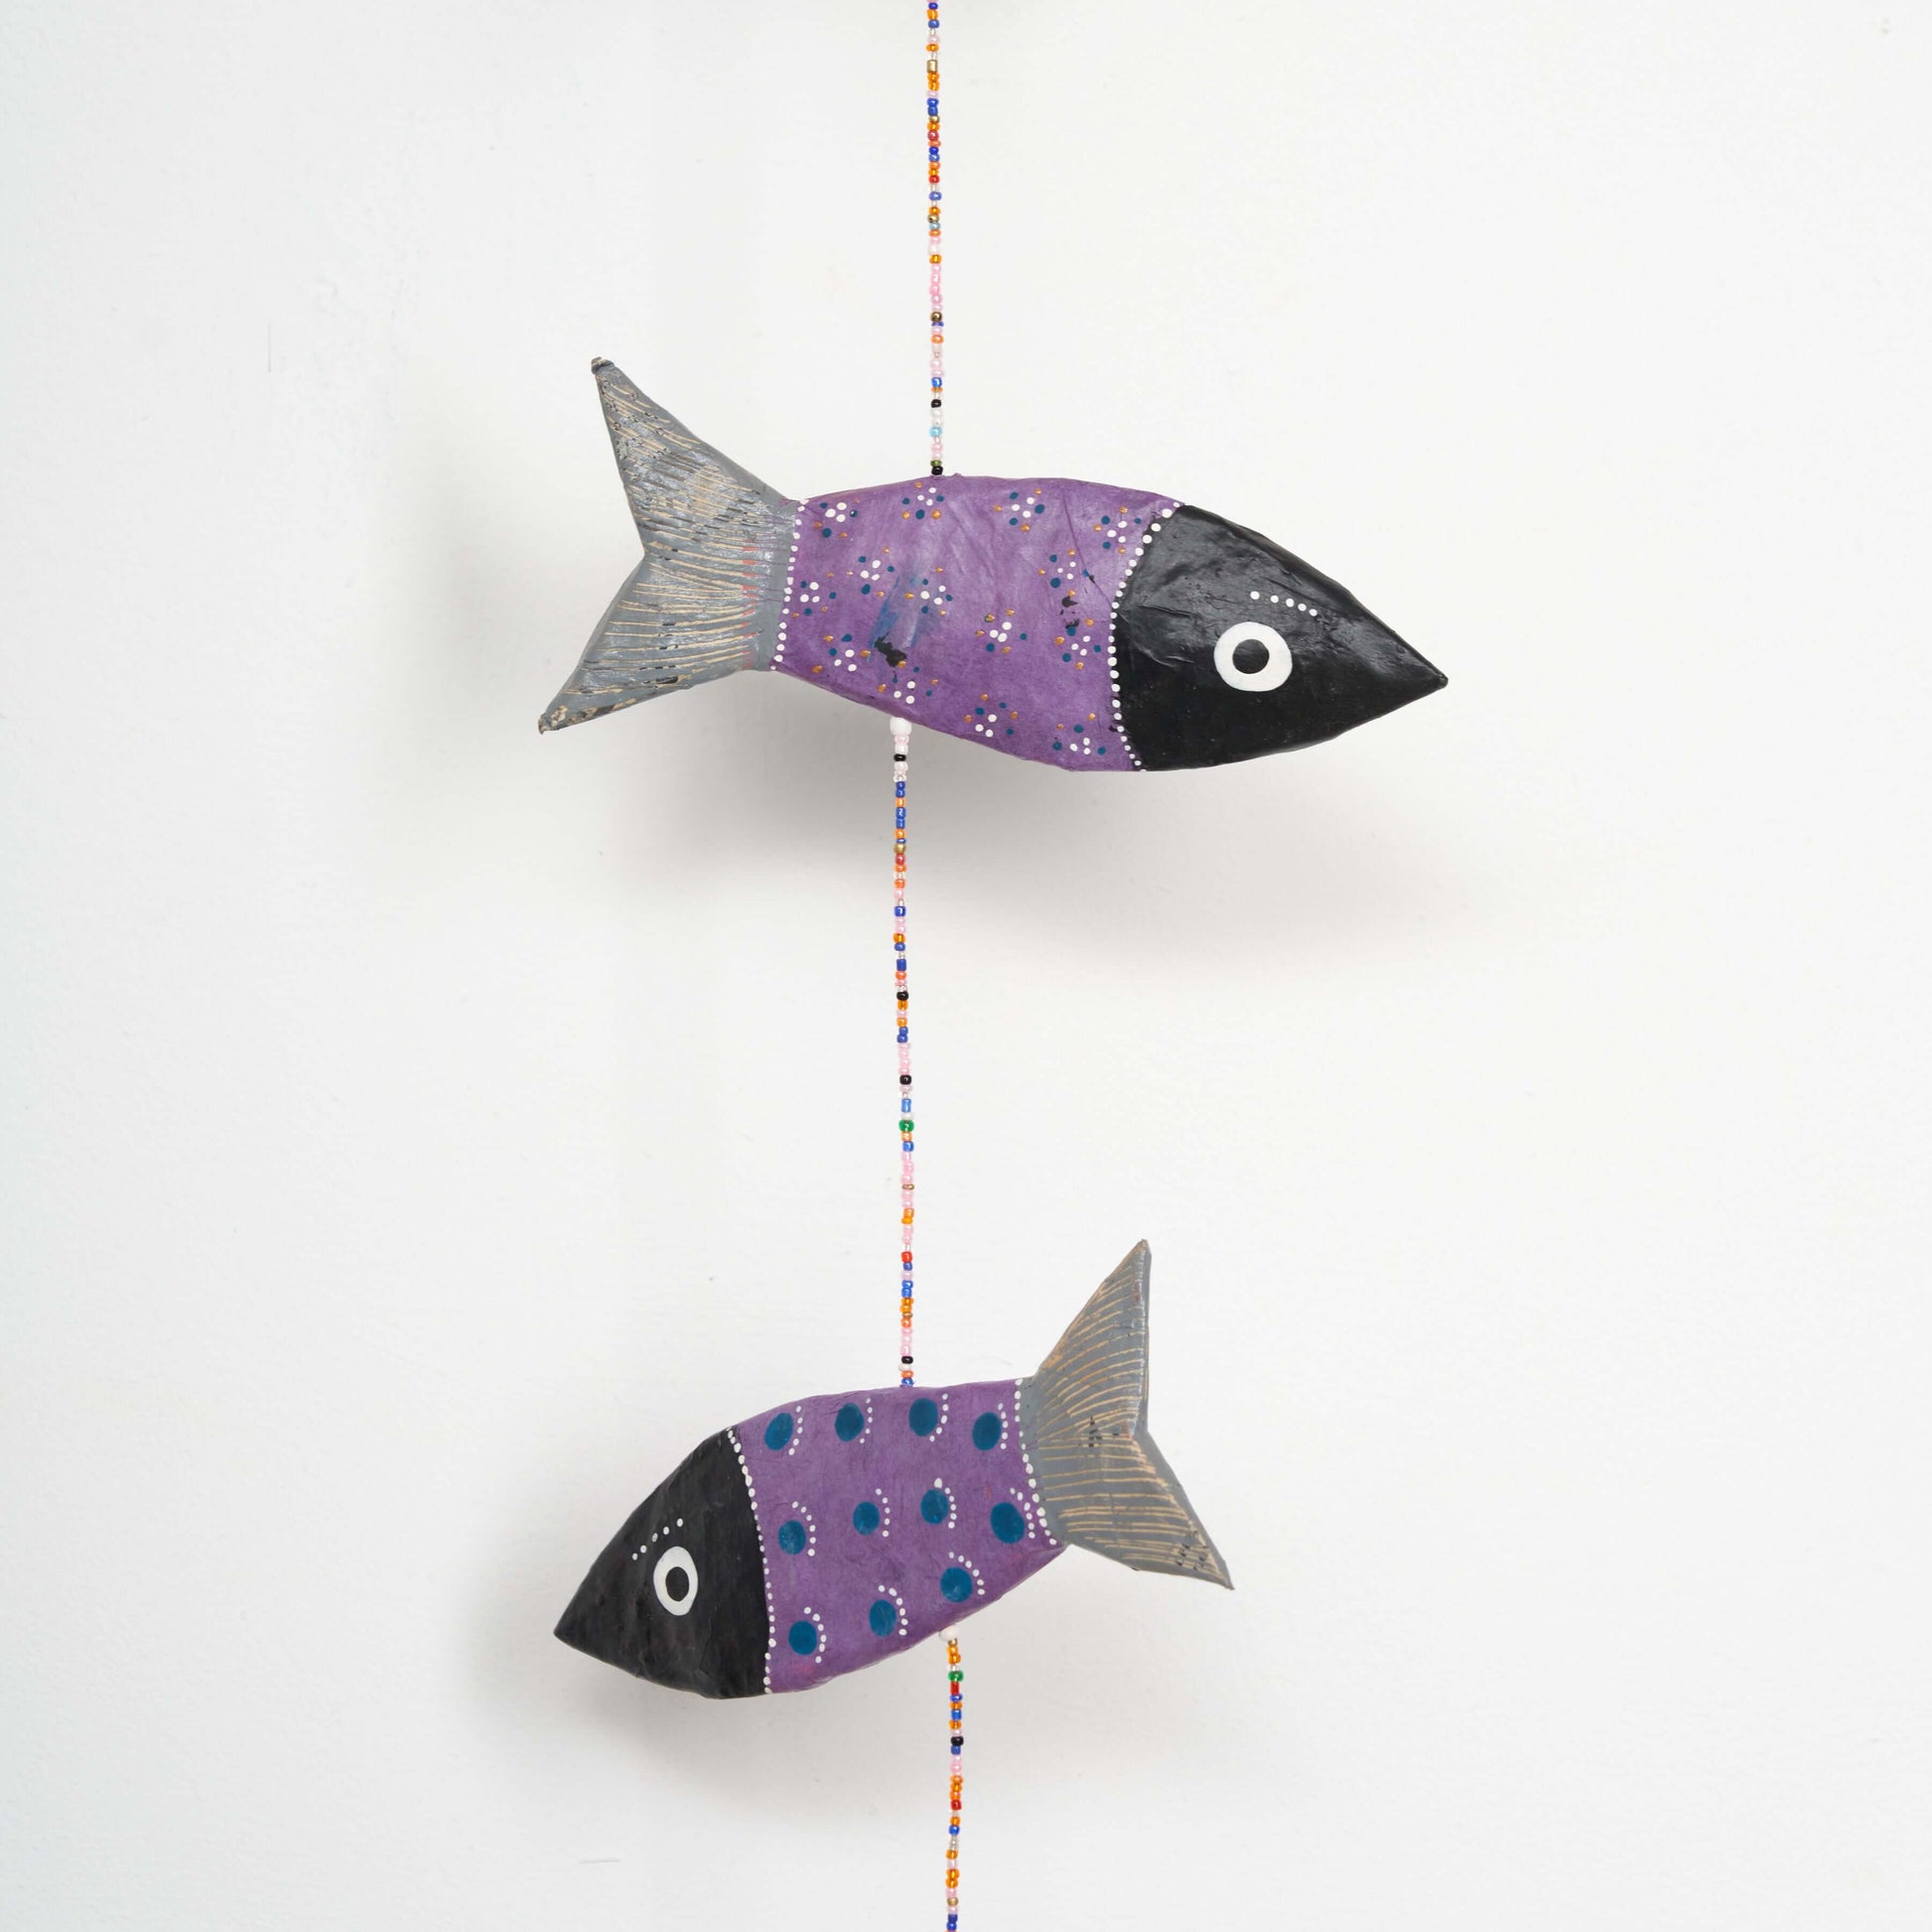 Girlande / Mobilé "Forelle" Fisch aus Pappmaché aus recyceltem Papier | Upcycling, handgemacht